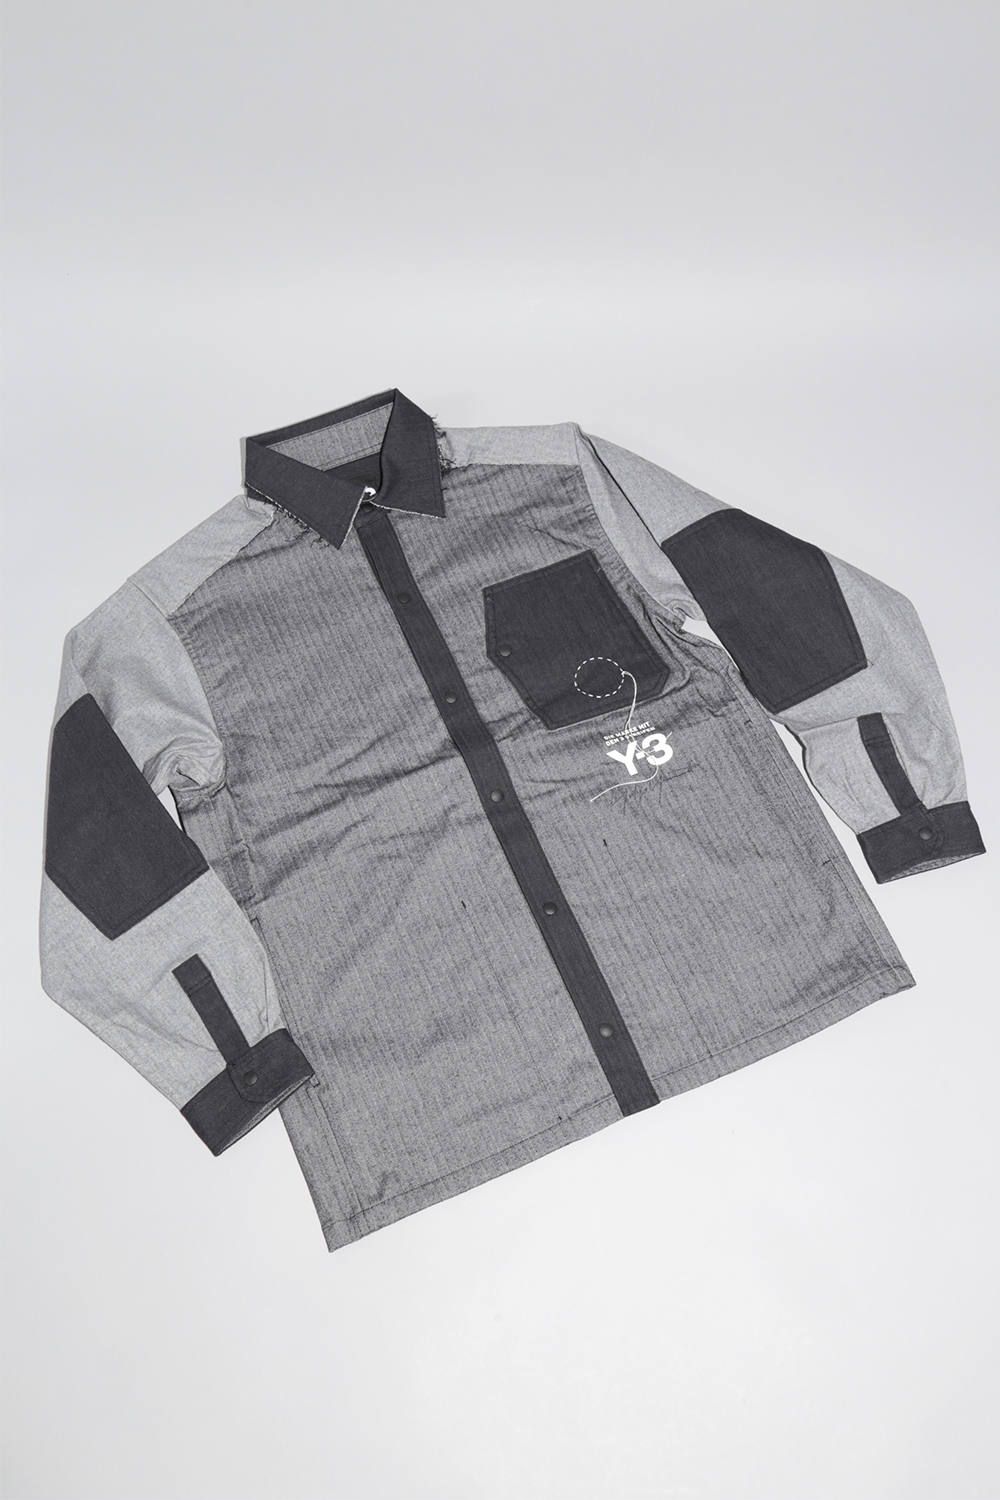 Y-3 Herringbone Overshirt -ヘリンボーン オーバーサイズシャツ- | River